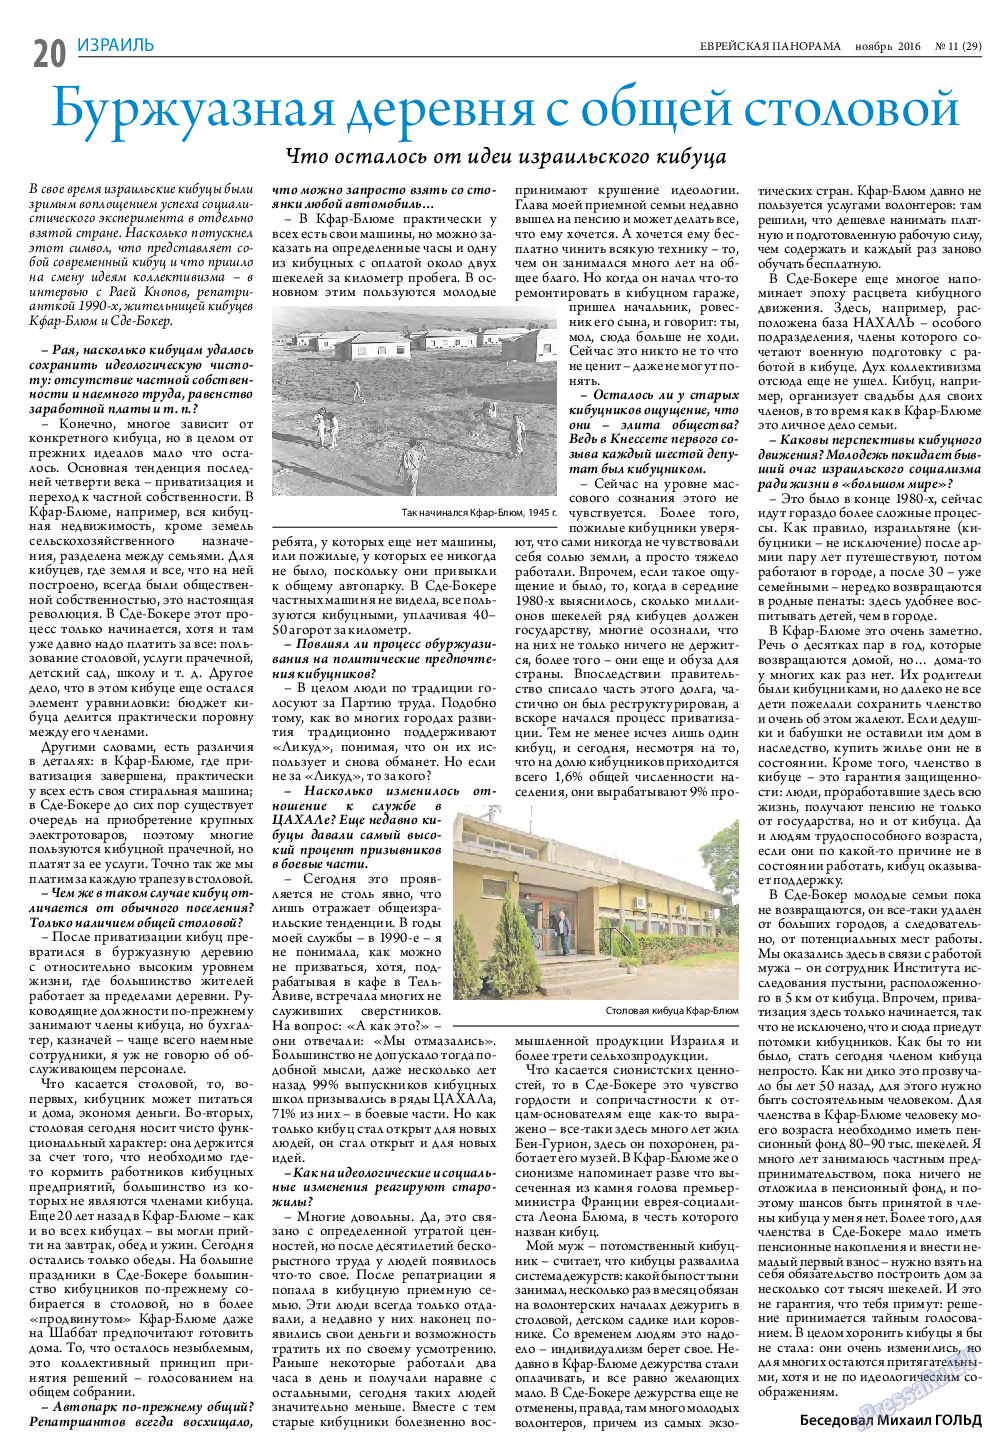 Еврейская панорама, газета. 2016 №11 стр.20